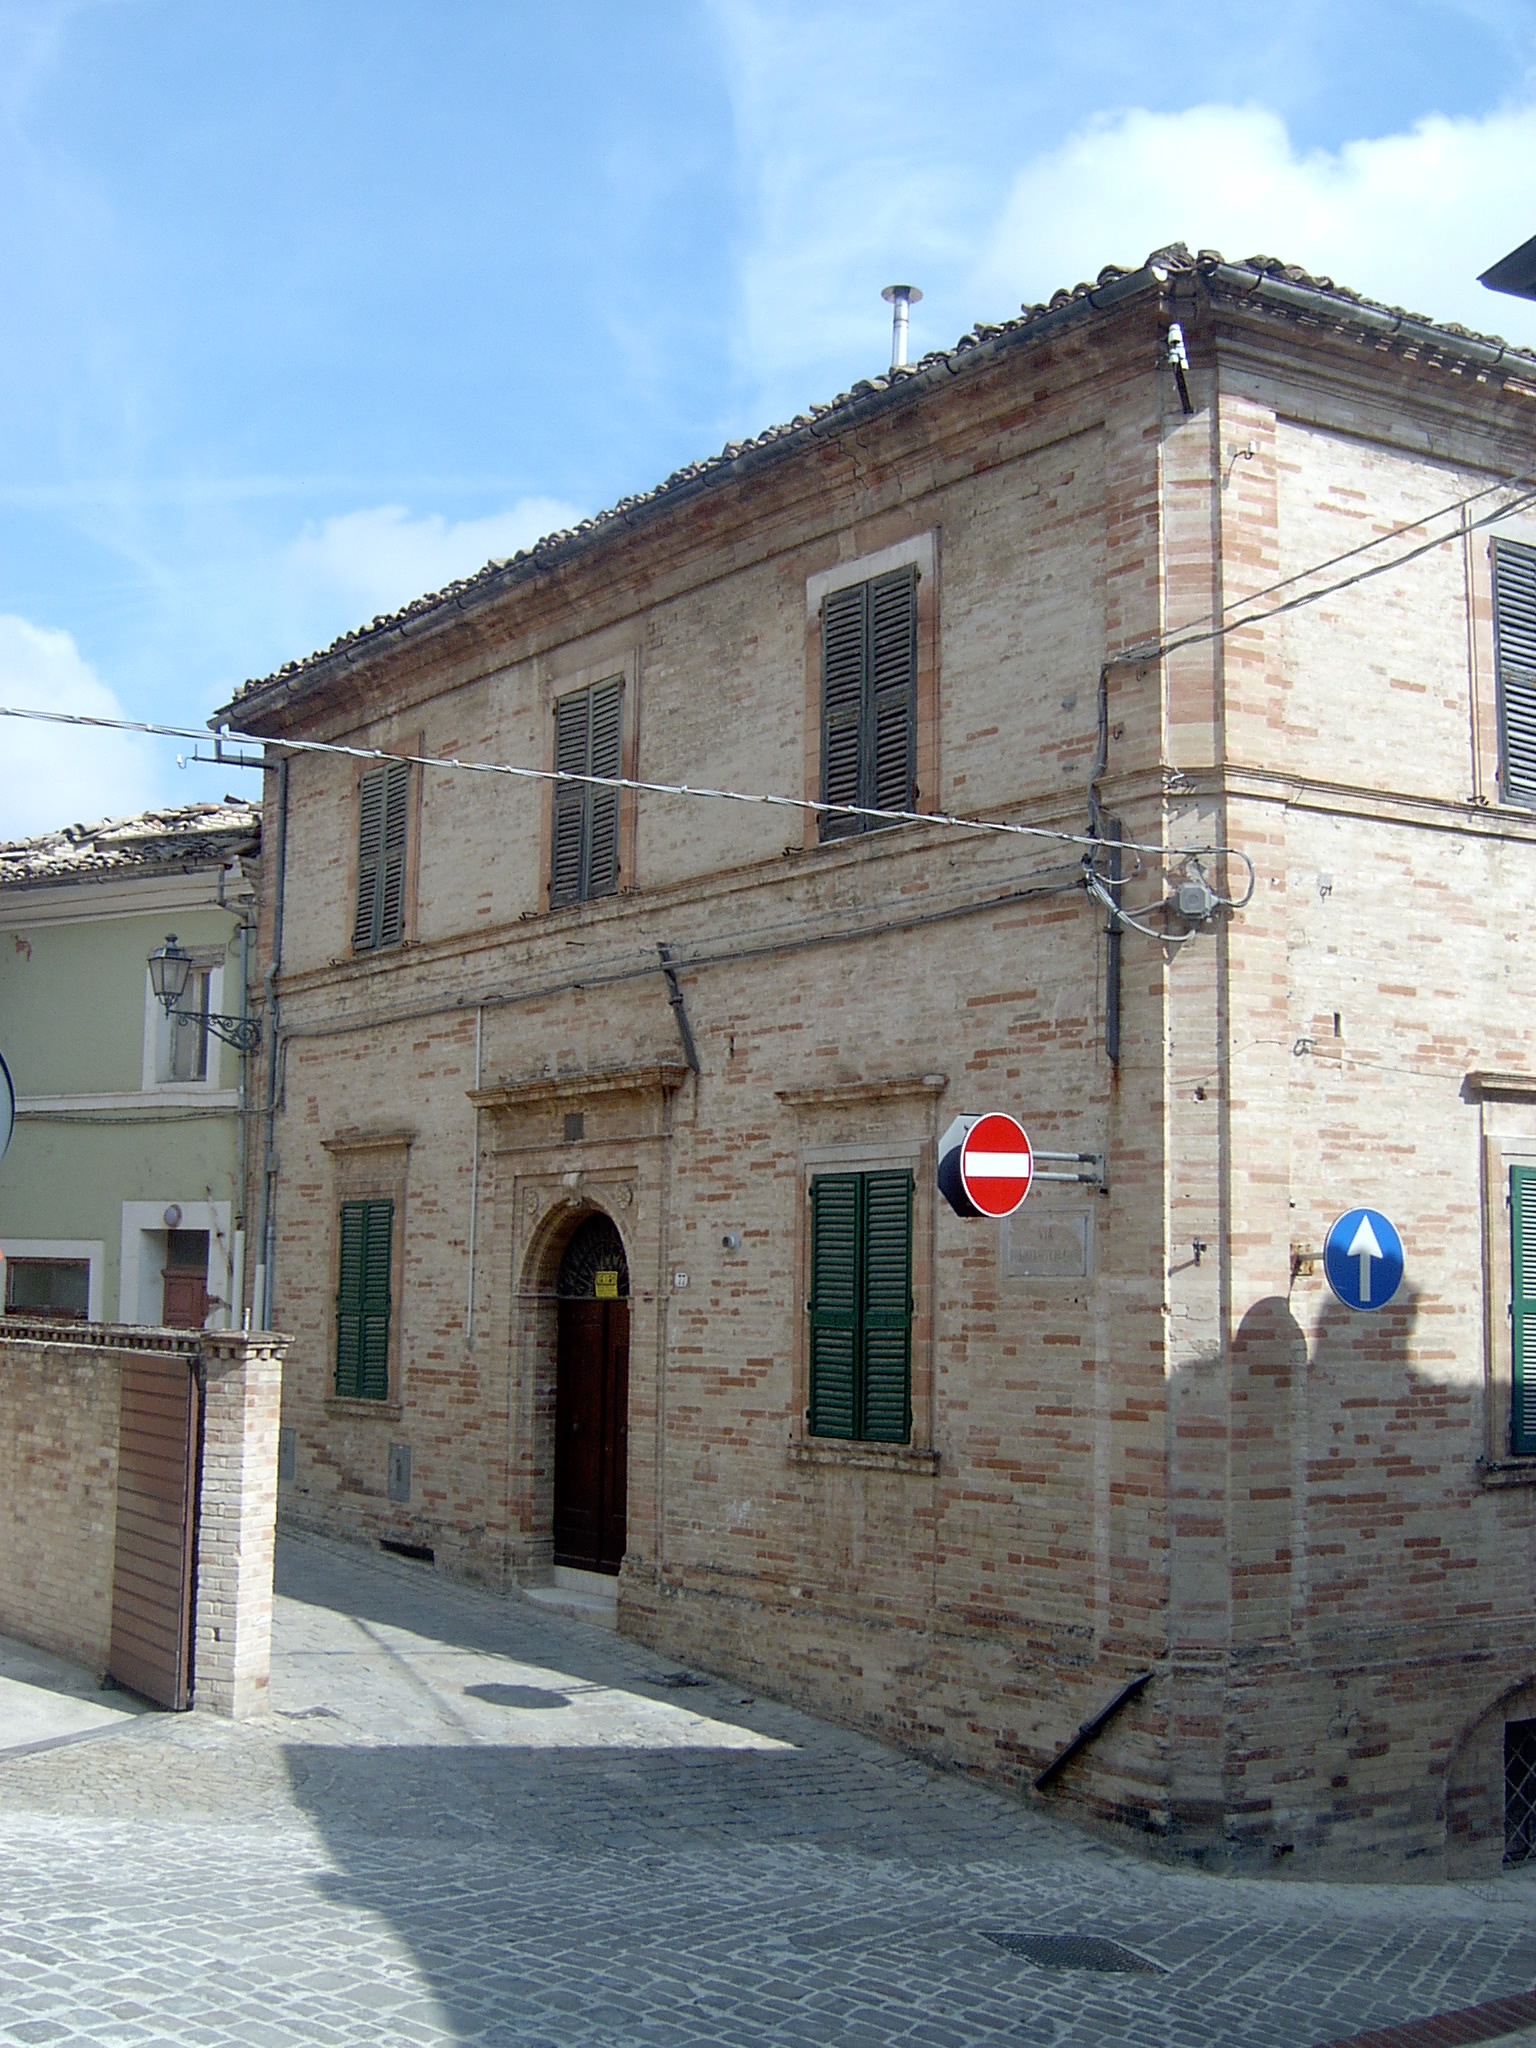 Palazzo signorile (palazzo, signorile) - Montelupone (MC) 